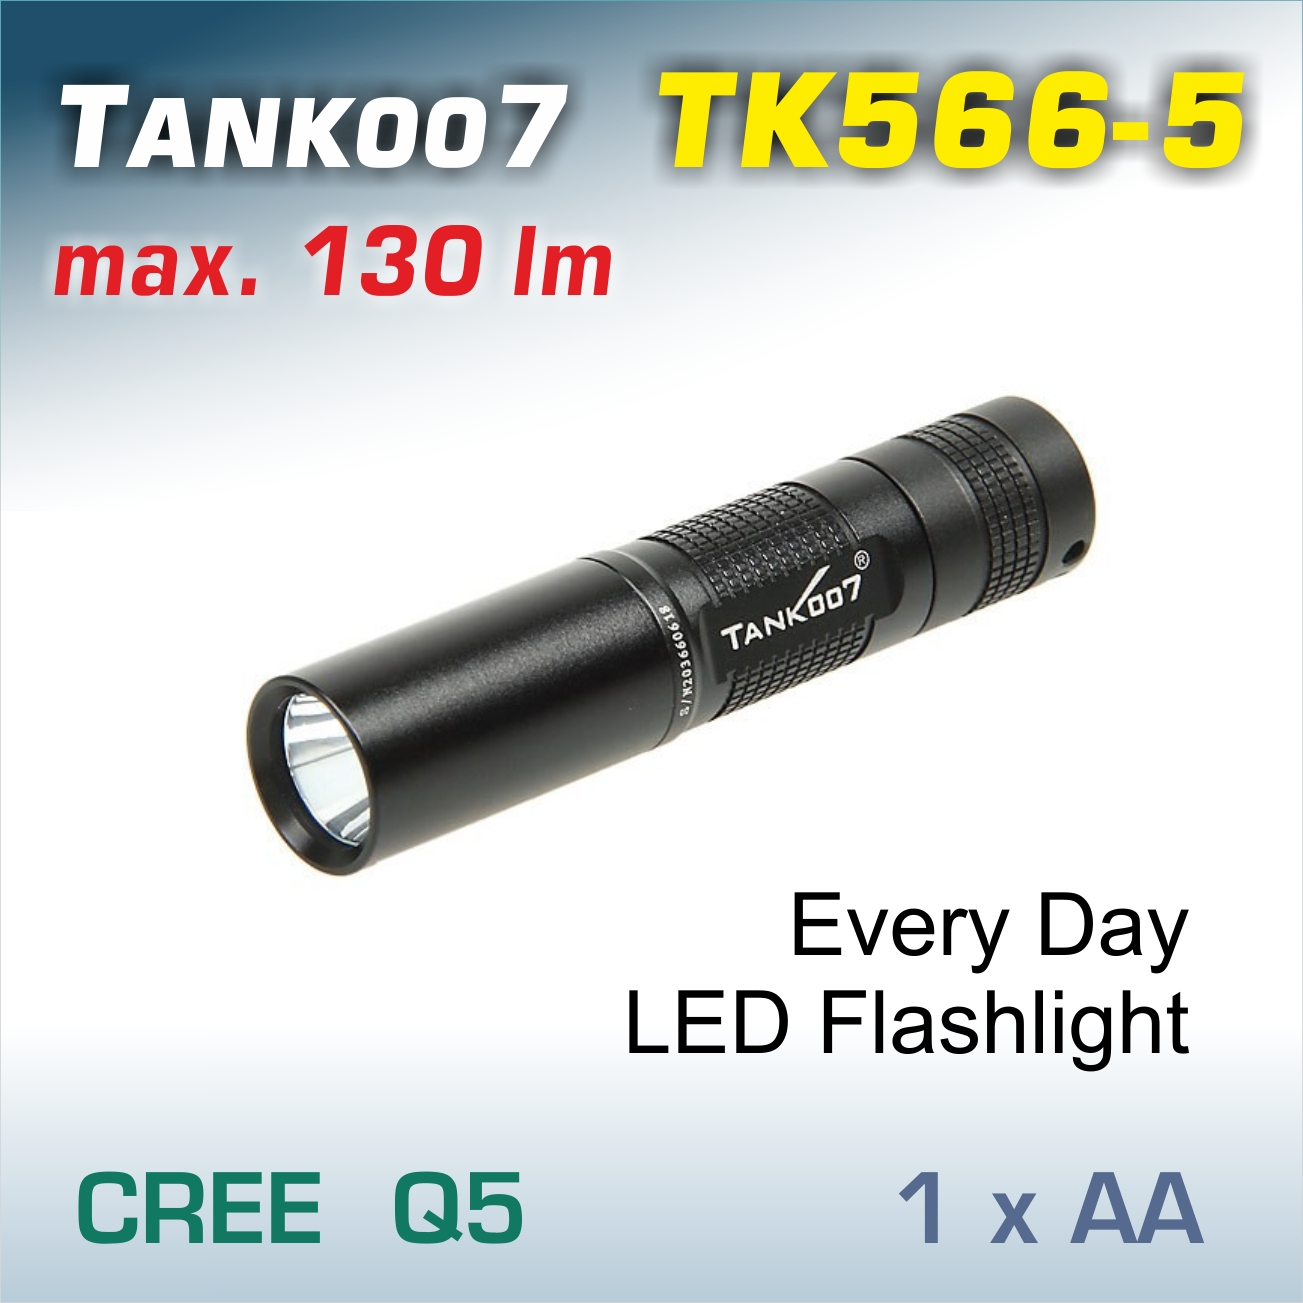 TANK007 TK566-5 LED baterka Q5, 1xAA